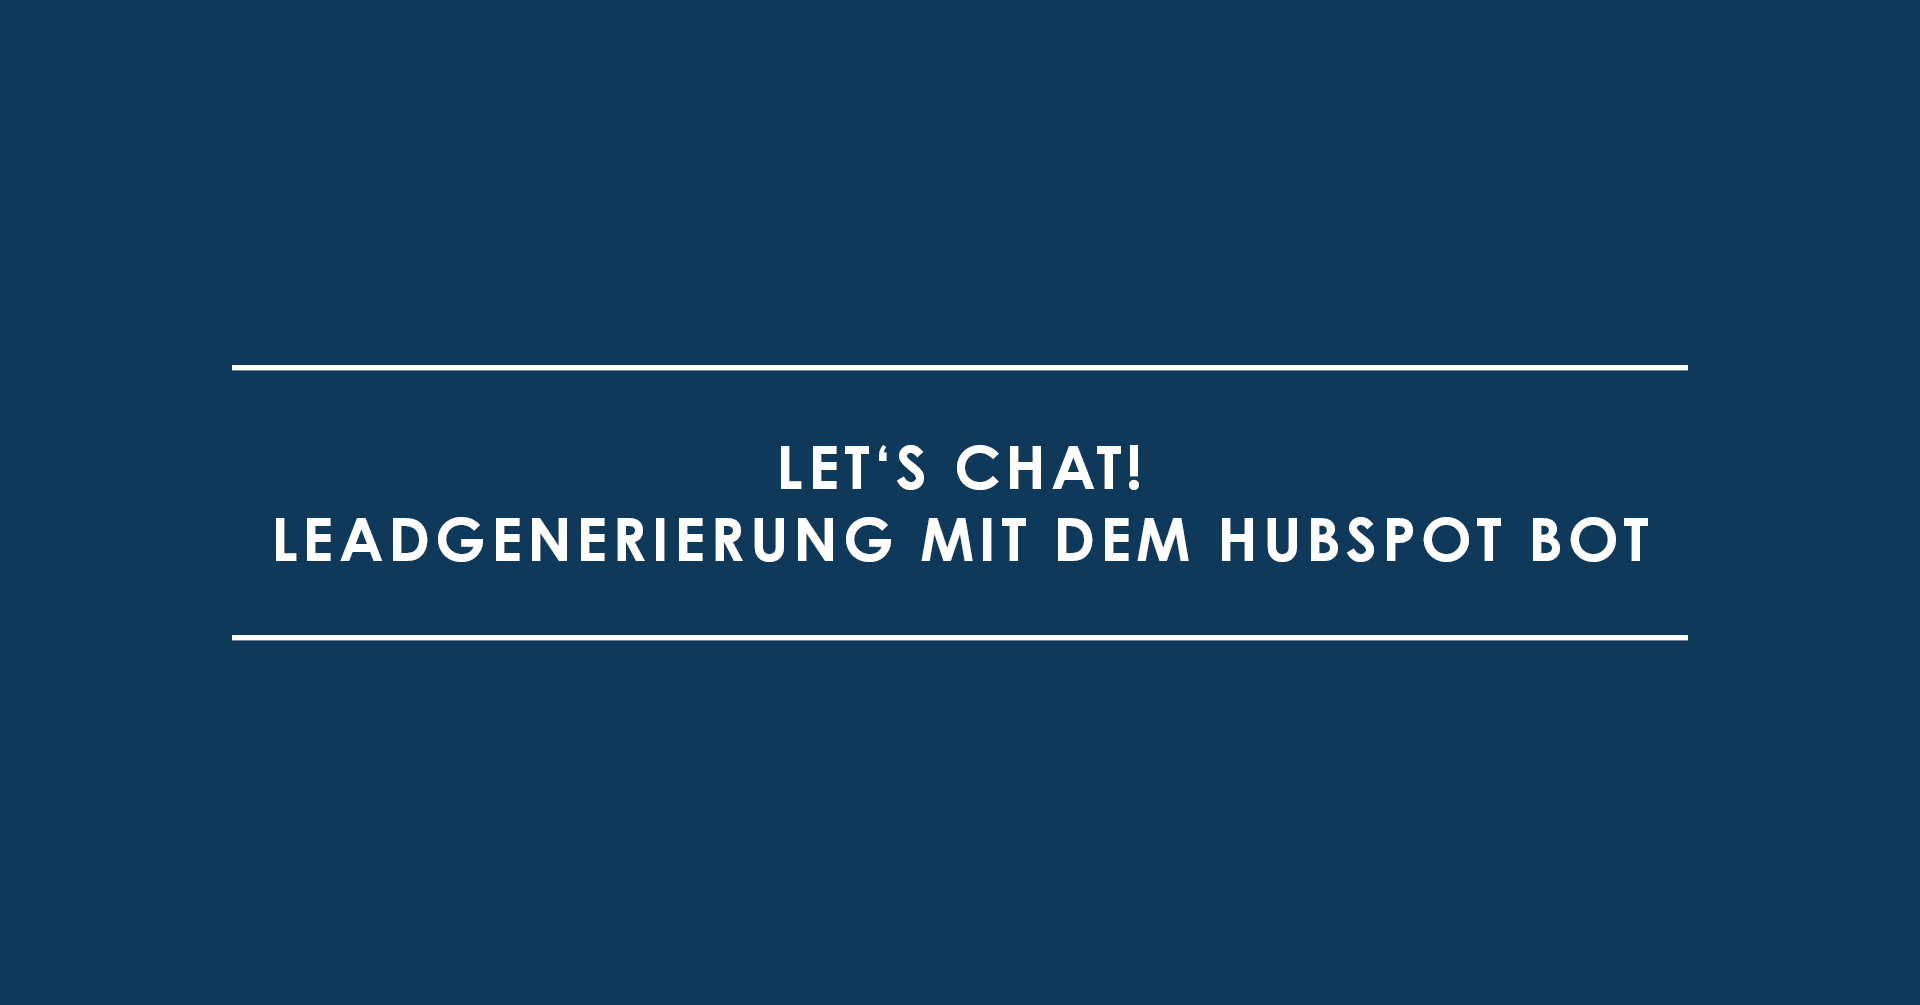 Let's Chat! Leadgenerierung mit dem HubSpot Bot